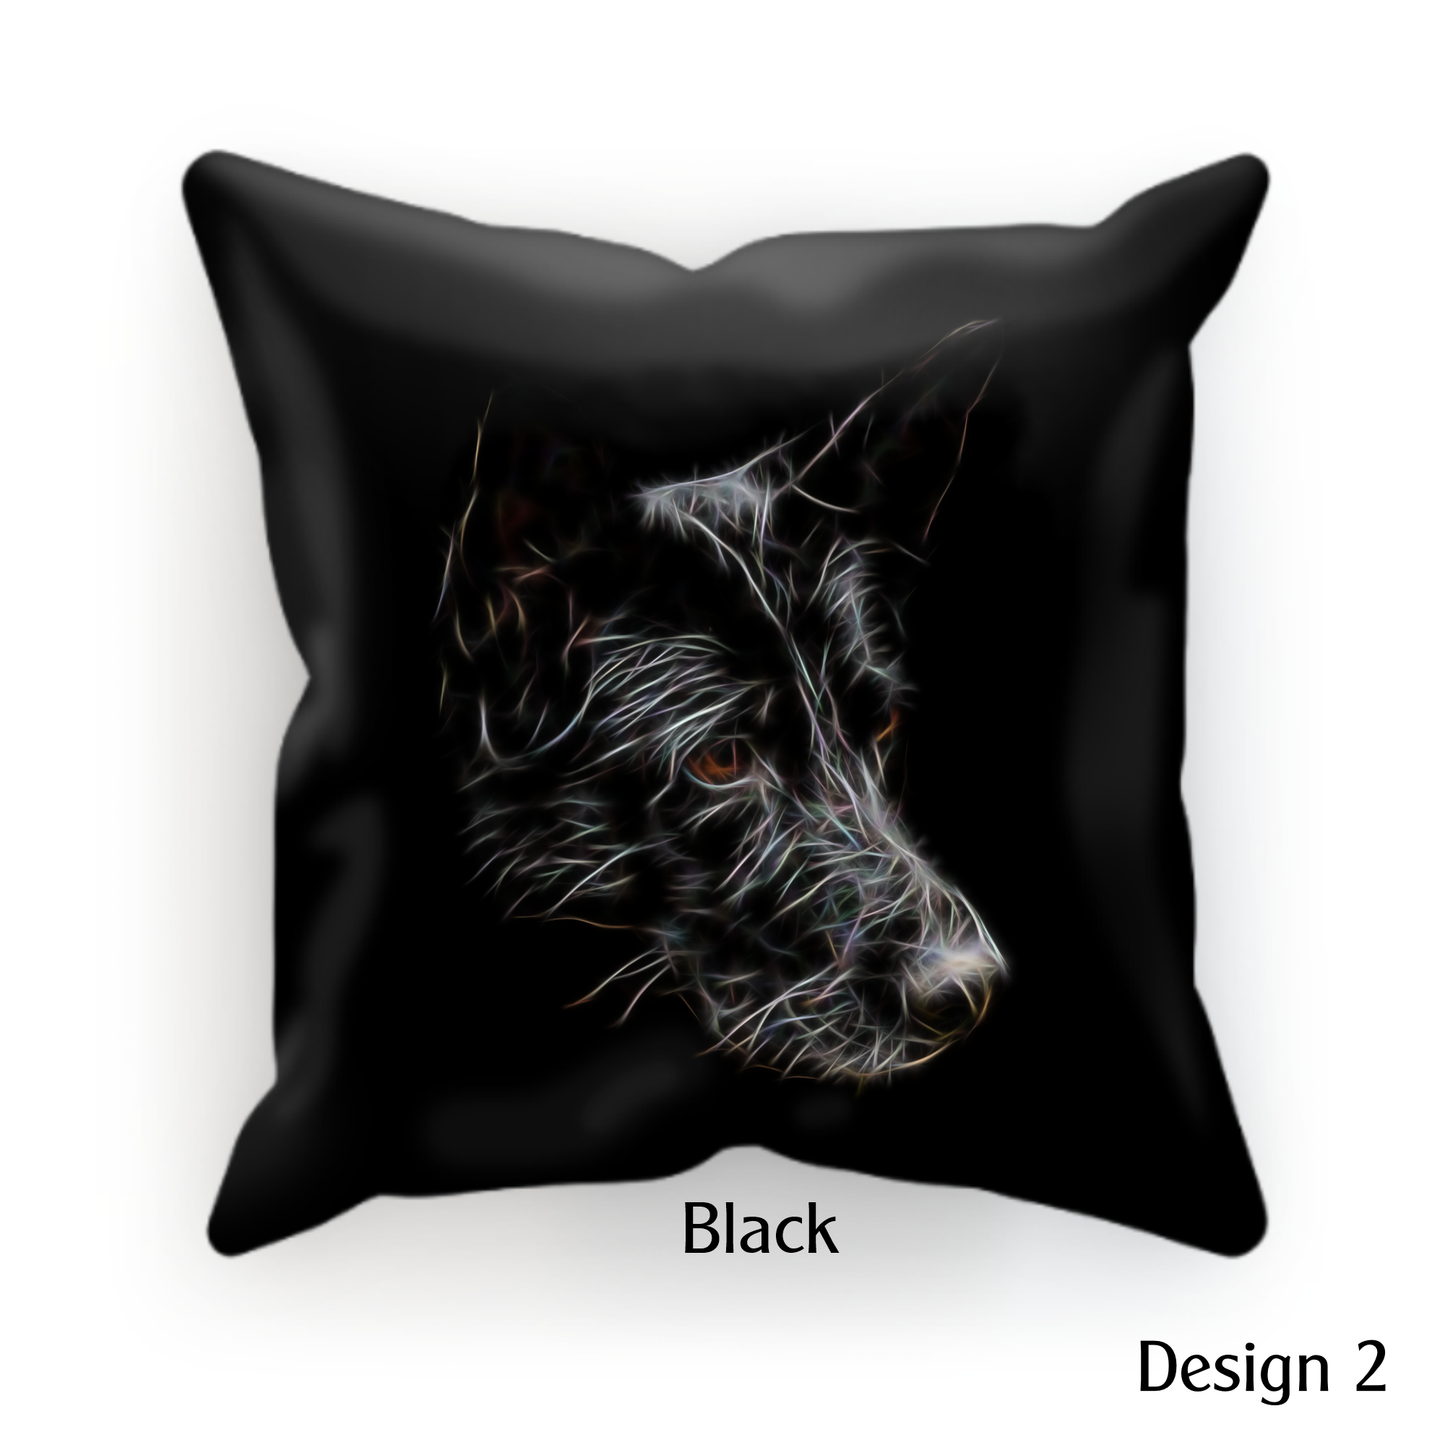 Black German Shepherd Cushion with Pillow Insert